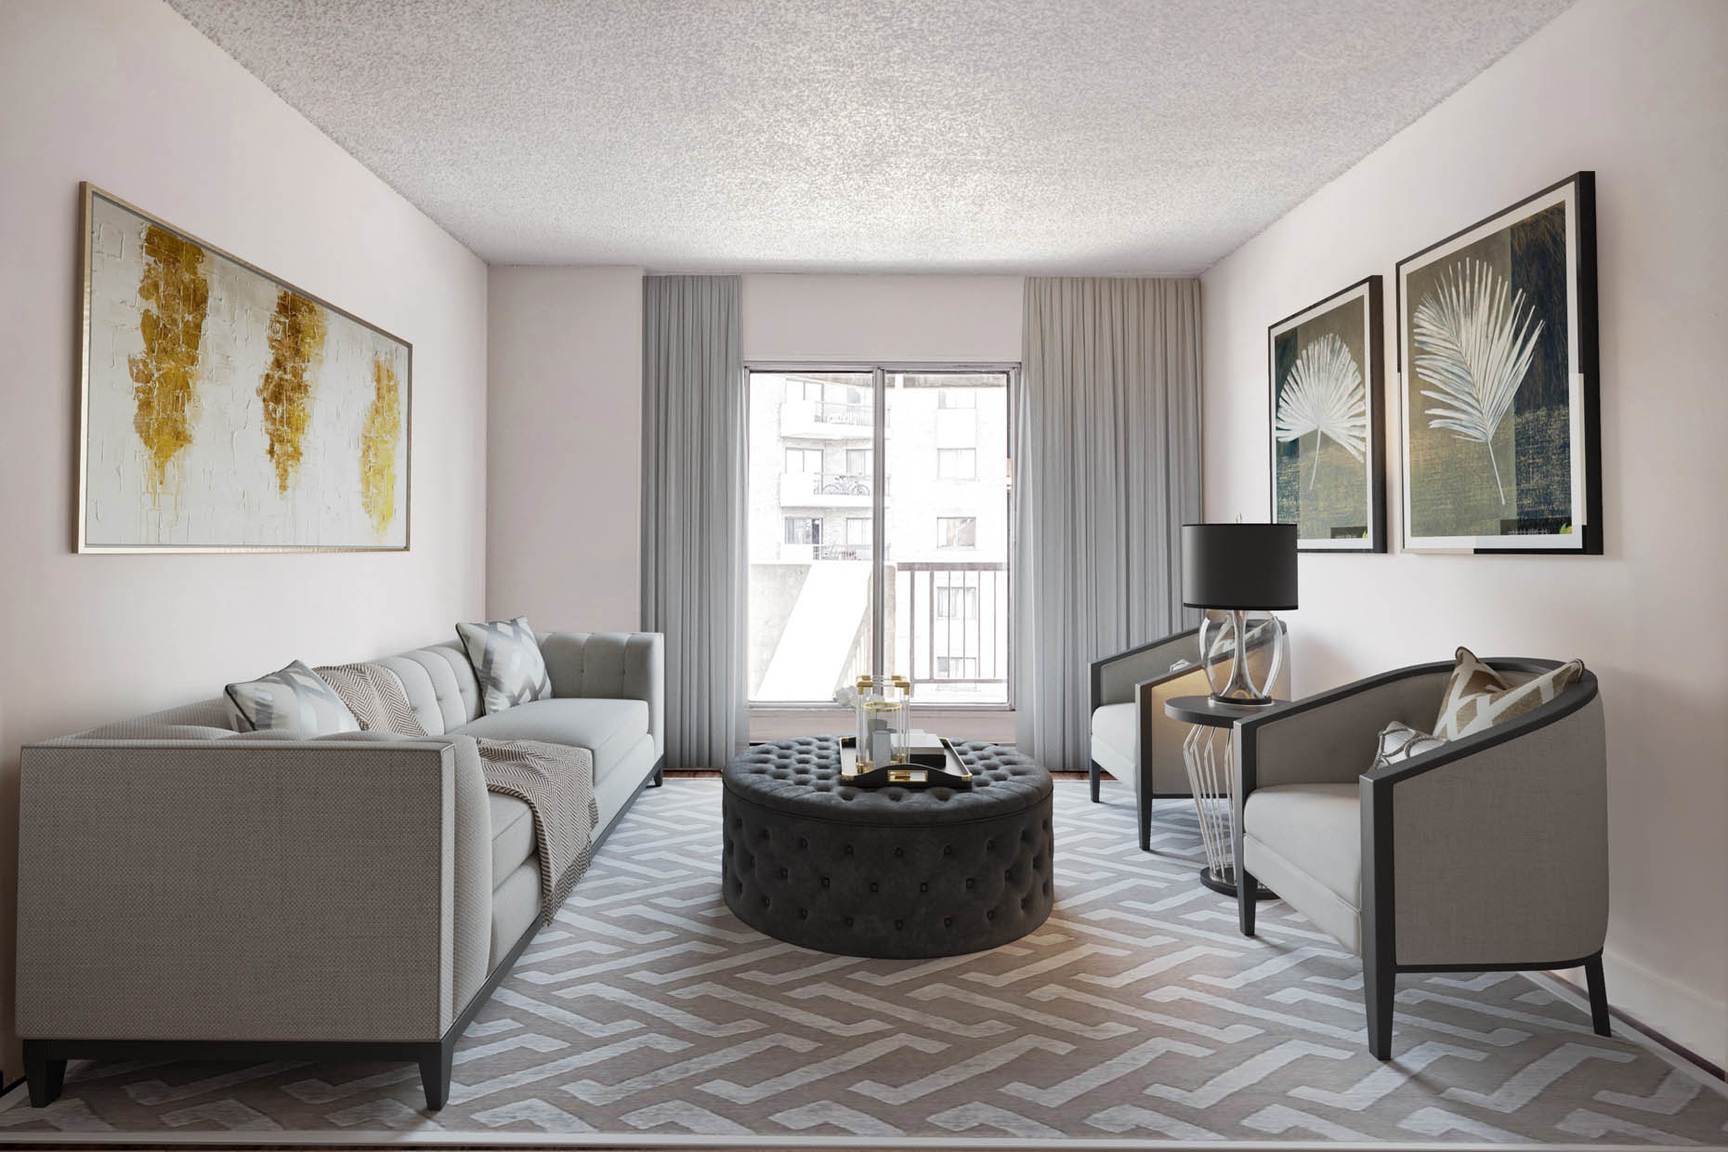 1 bedroom Apartments for rent in Ville St-Laurent - Bois-Franc at Complexe Deguire - Photo 02 - RentersPages – L407181